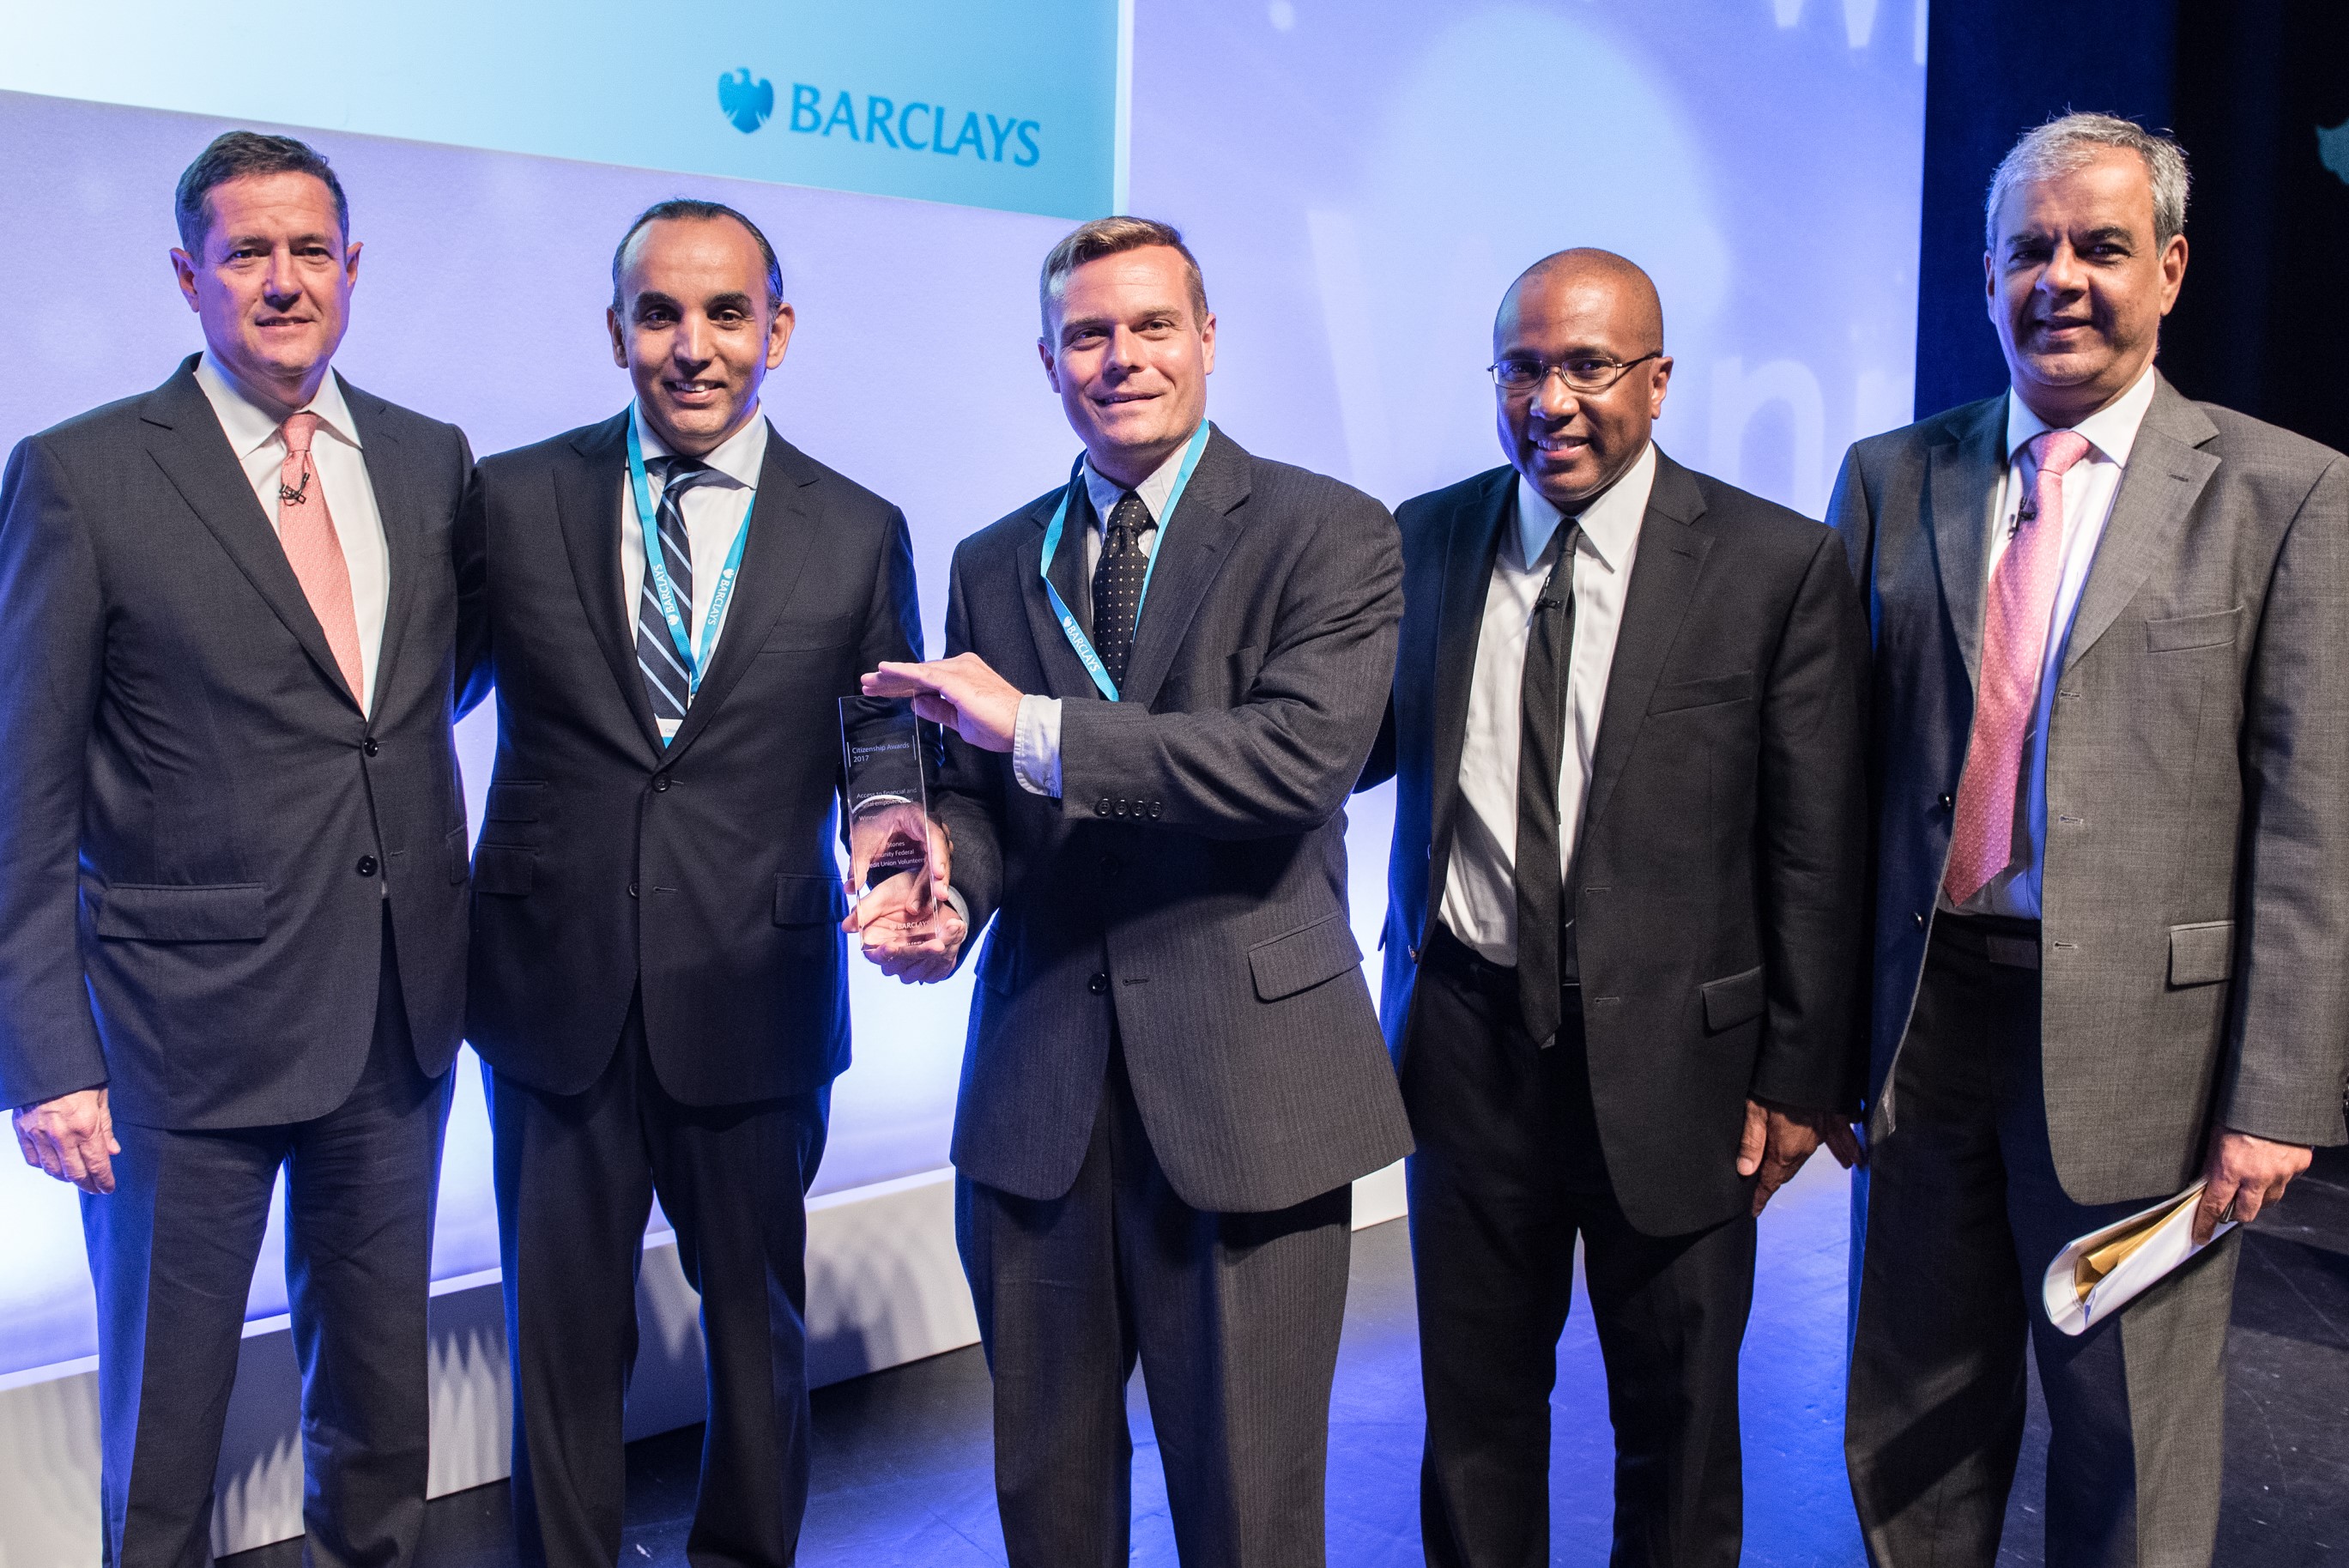 Jes Staley, Barclays group chief executive; Barclays awardees Adam Allomar and John Elasic; DSU President Harry L. Williams; and Ashok Vaswani, chief executive officer, Barclays UK. 